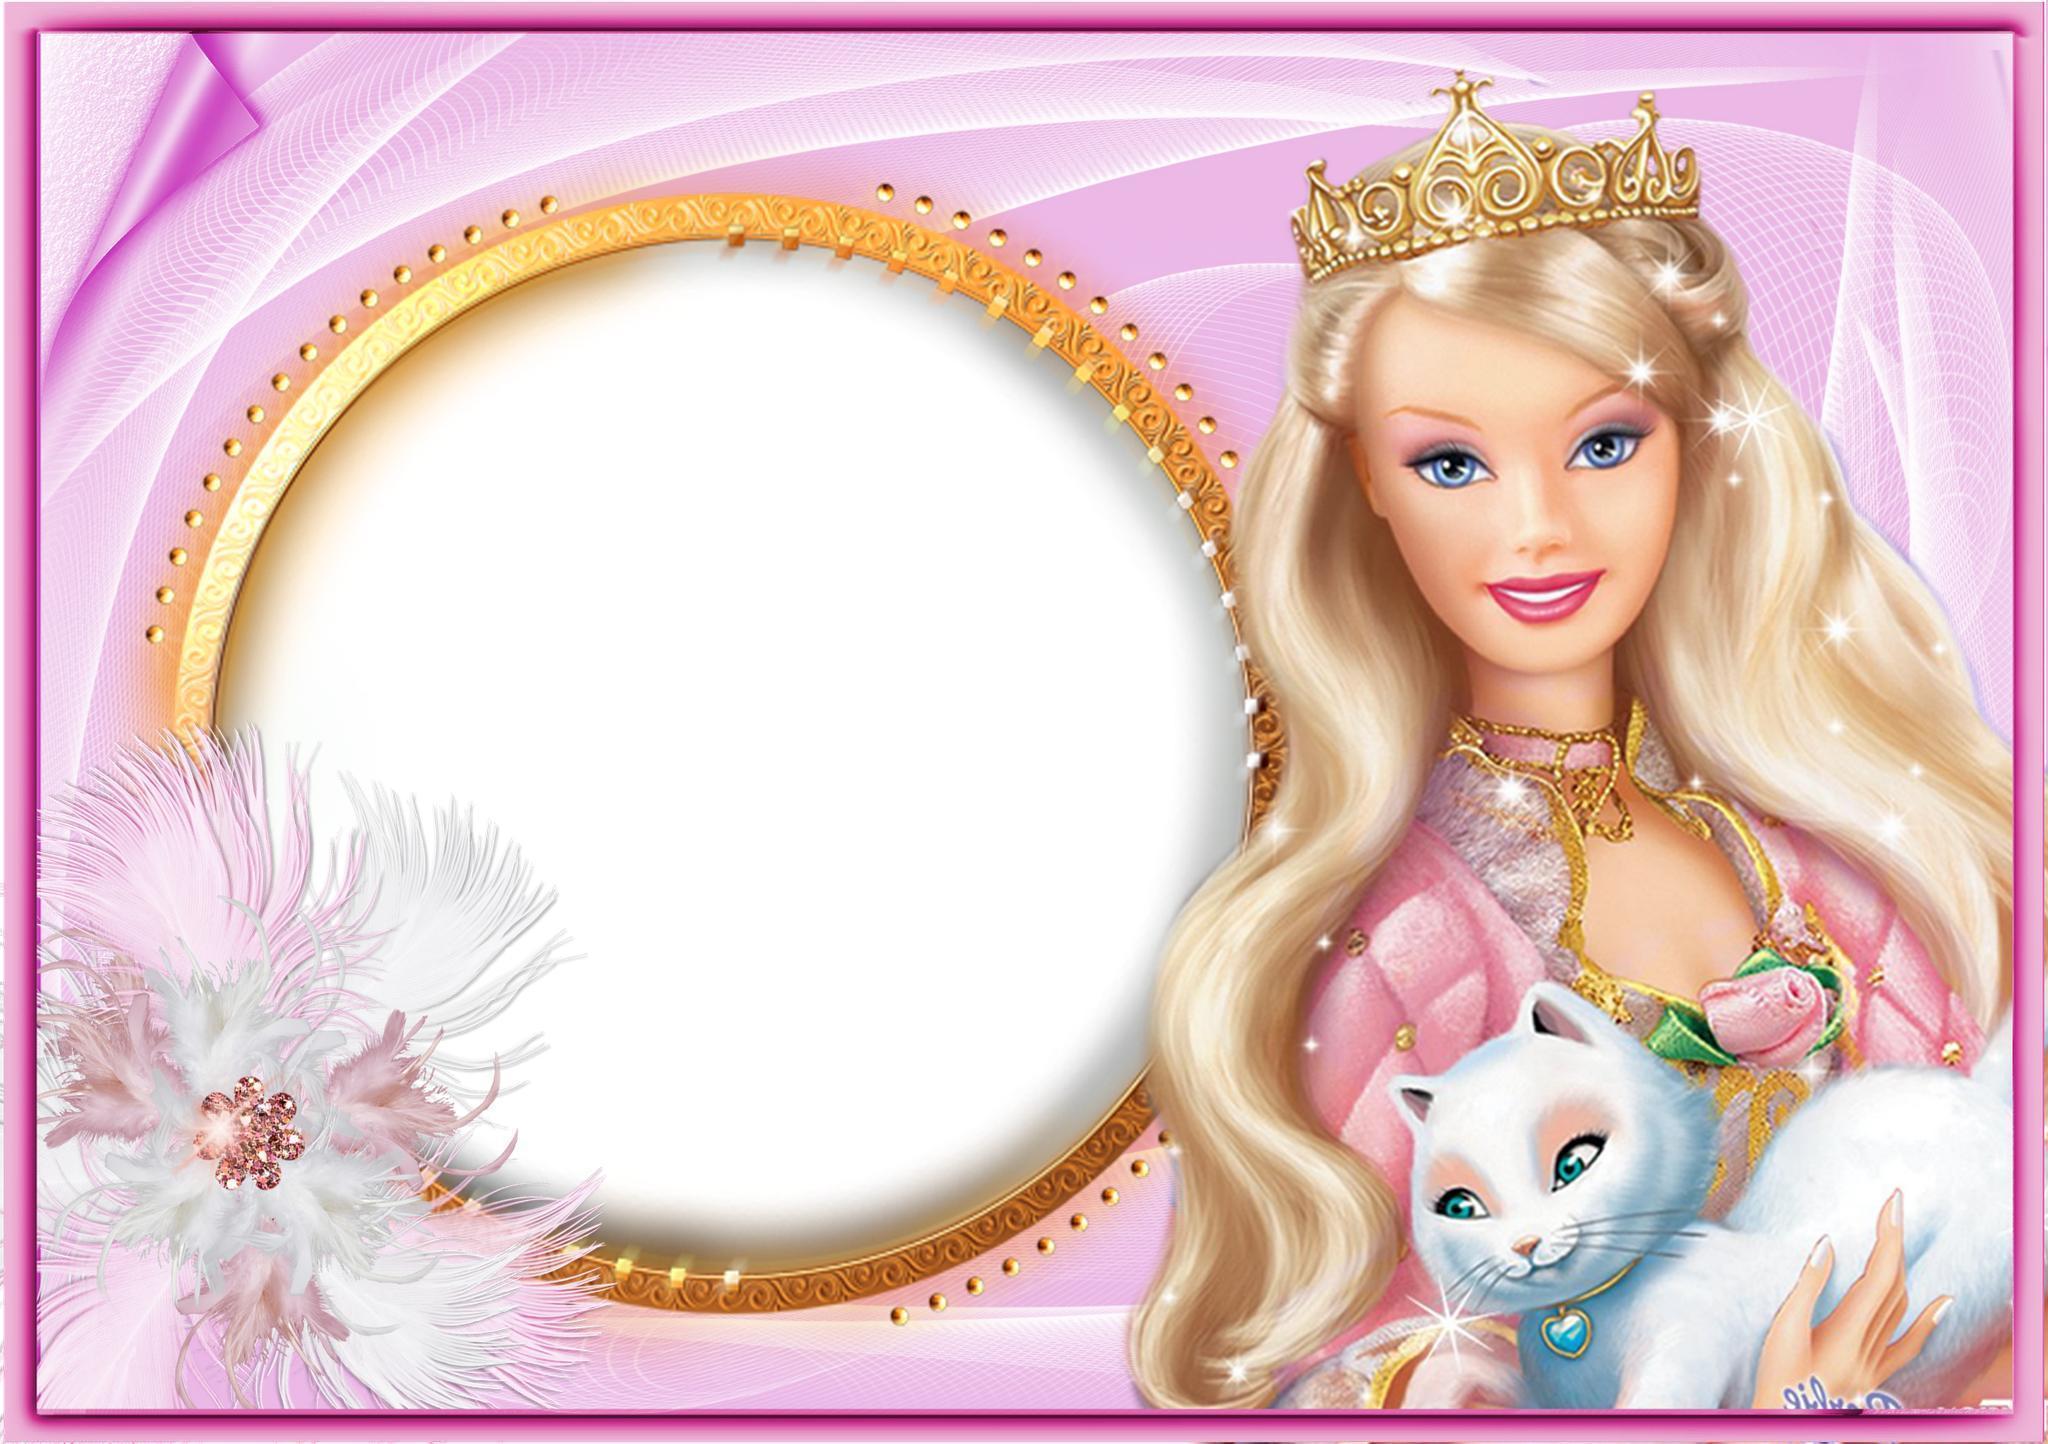 Barbie Wallpaper. Barbie Wallpaper, Toy Story 3 Barbie Wallpaper and Barbie Princess Wallpaper